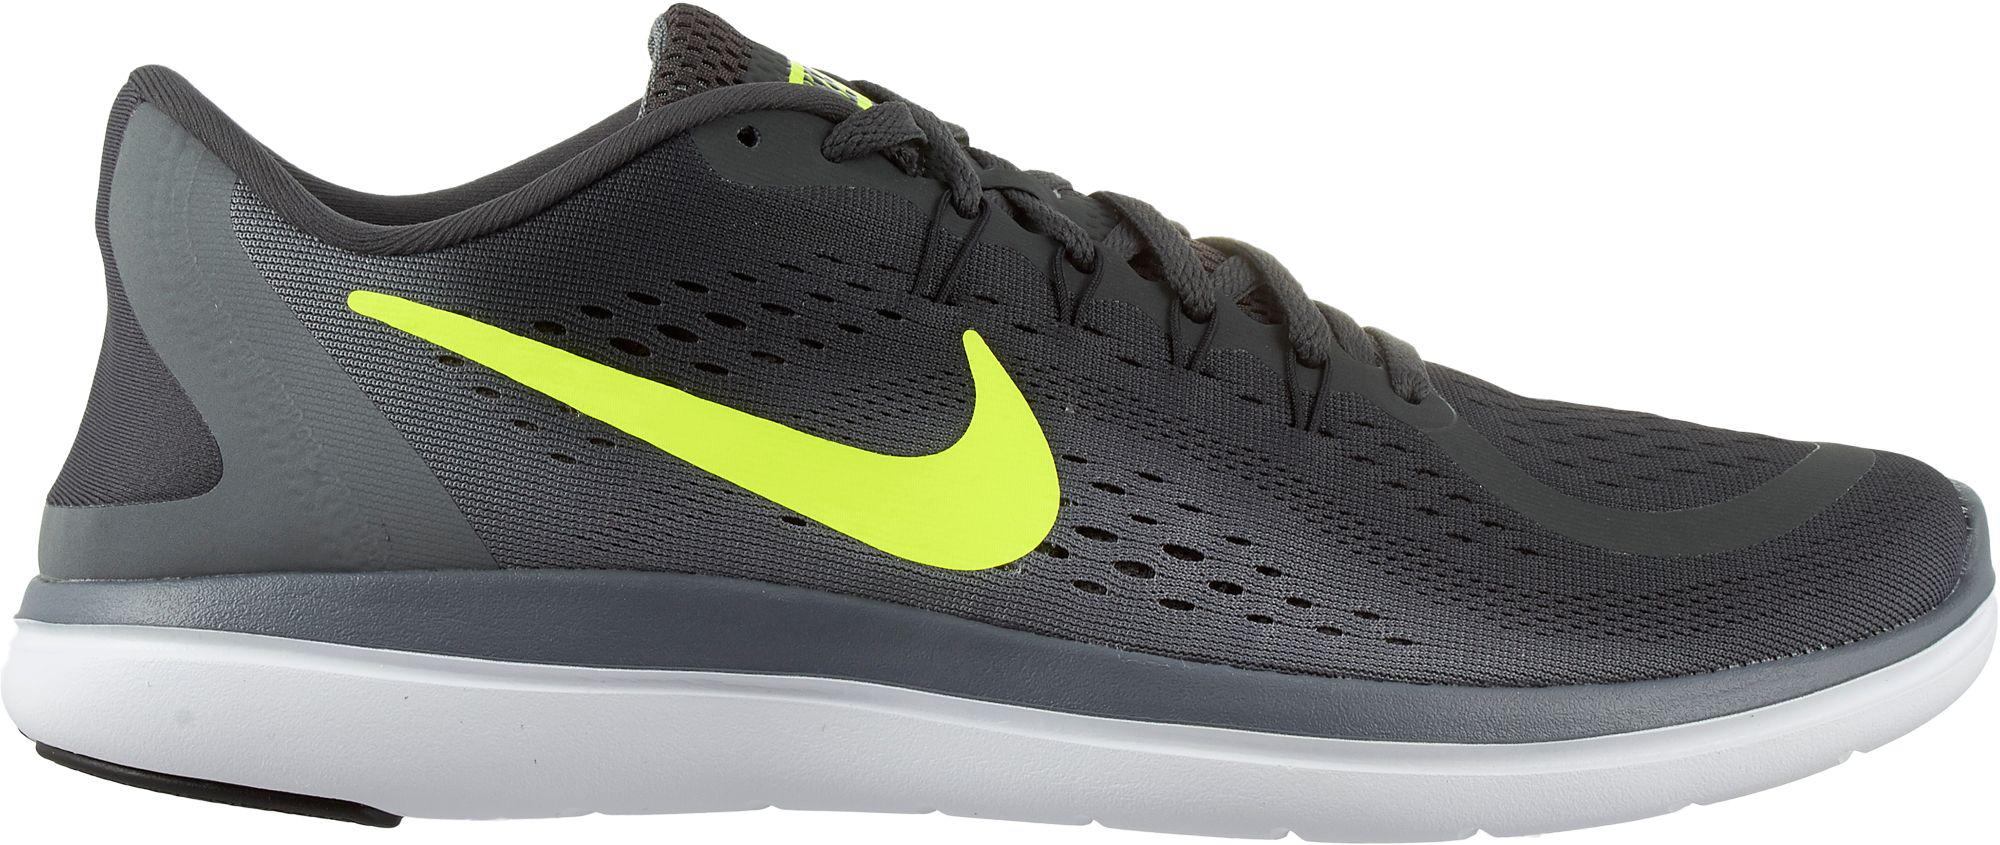 Nike Flex 2017 Rn Running Shoes in Gray for Men - Lyst